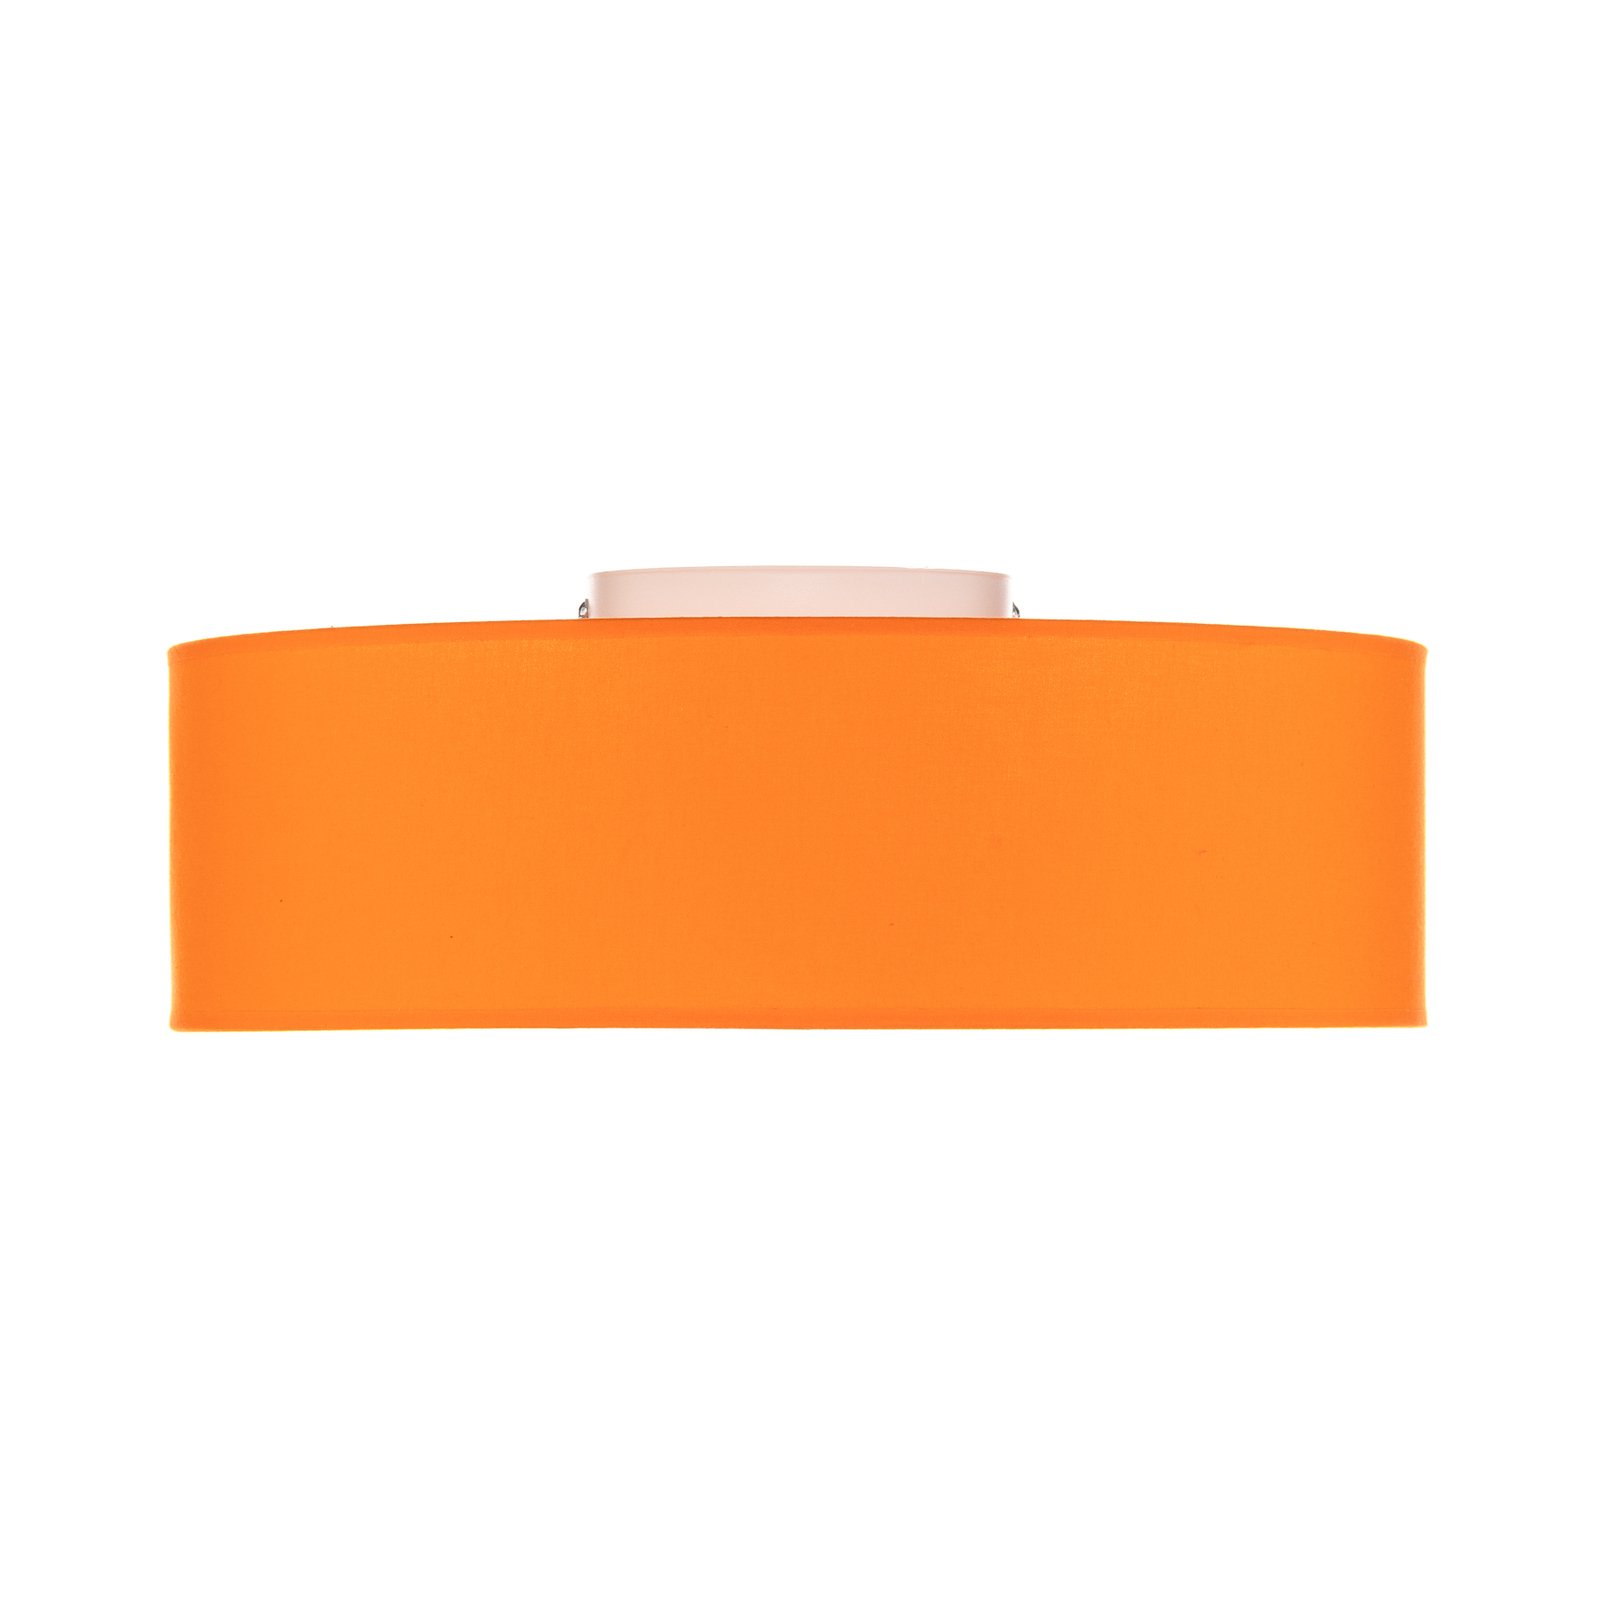 Roller Deck Euluna, tejido color naranja, Ø 40 cm